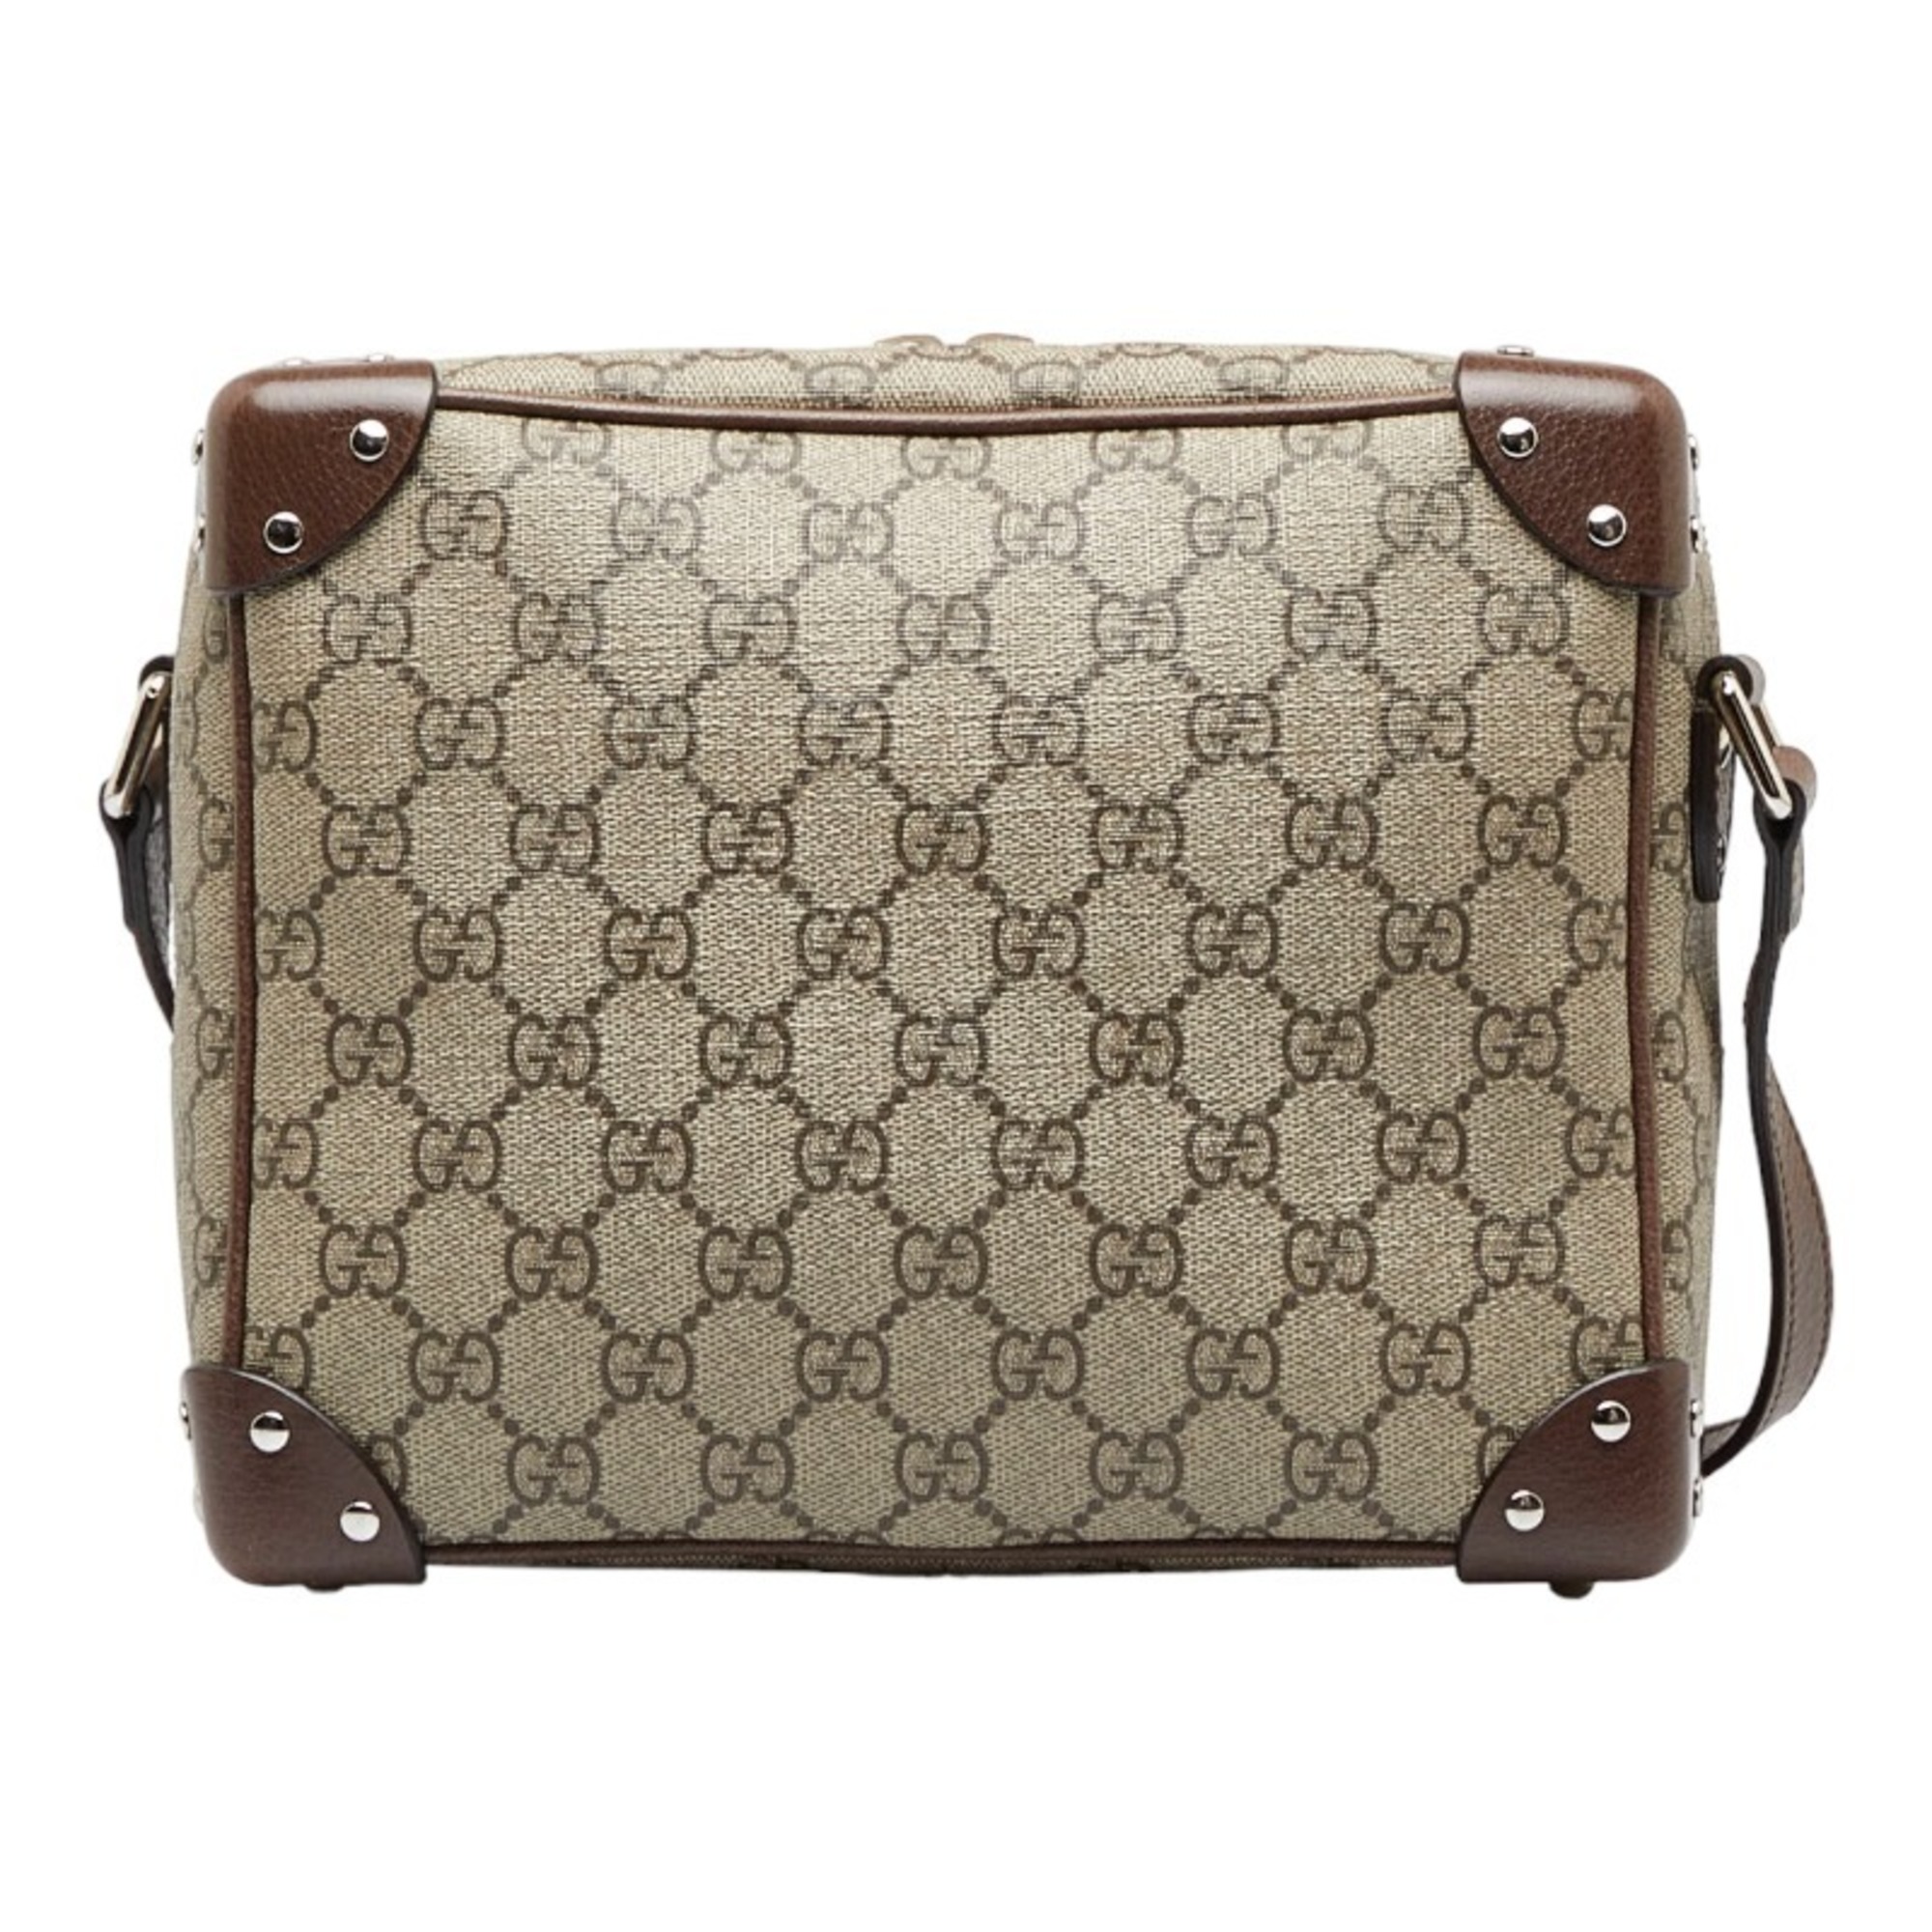 Gucci GG Supreme Shoulder Bag 626363 Beige Brown PVC Leather Women's GUCCI